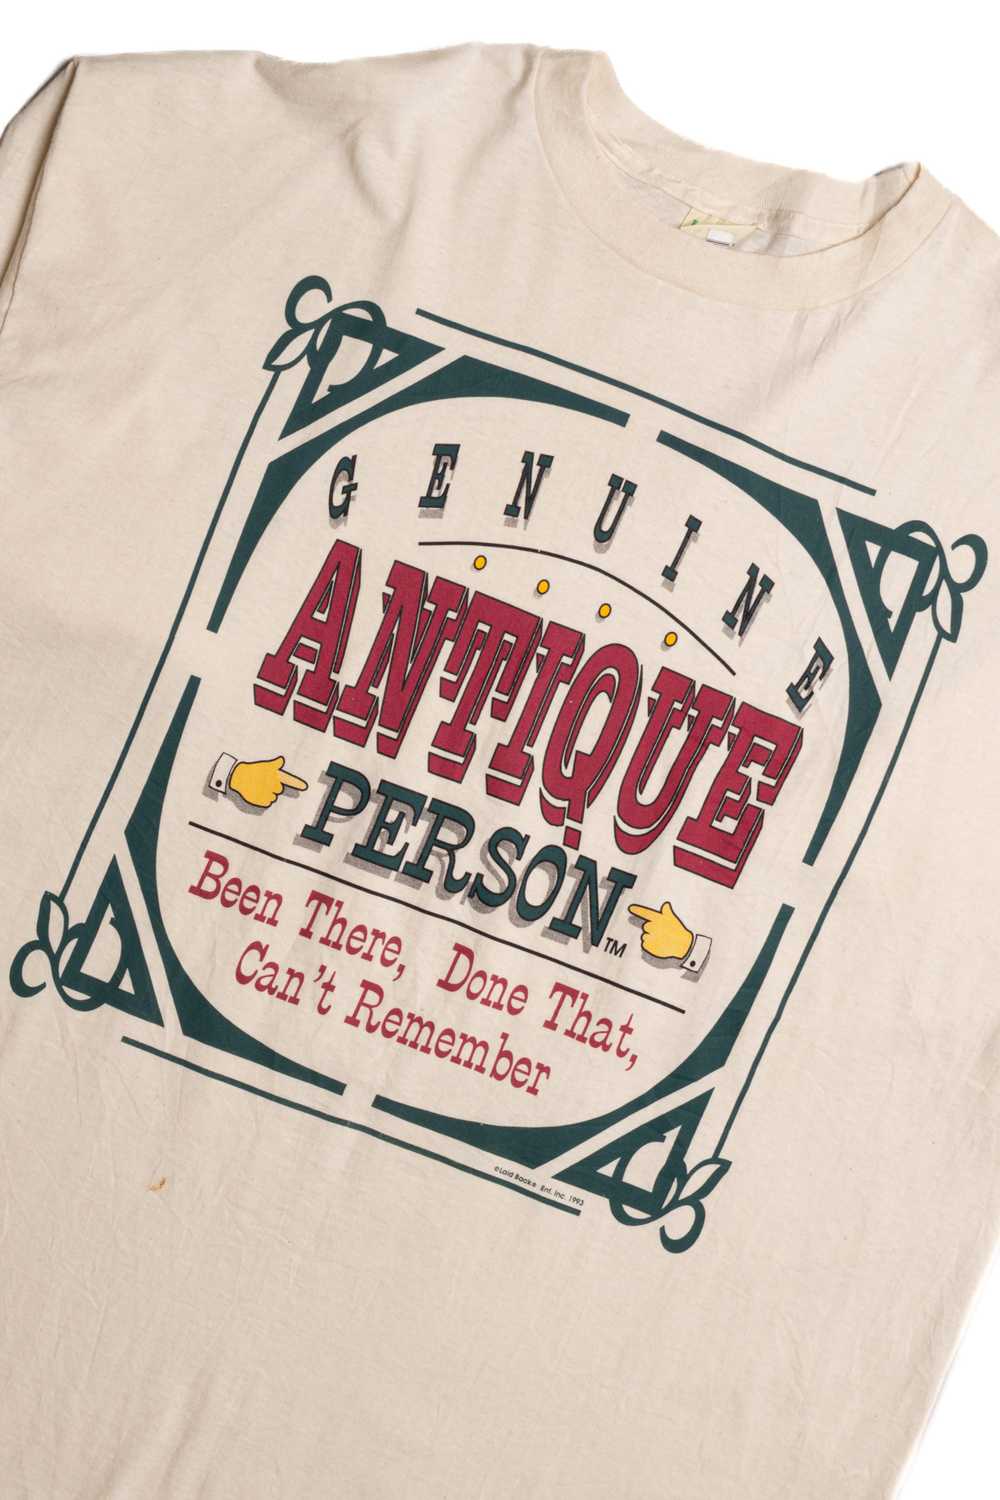 Genuine Antique Person T-Shirt 8495 - image 2